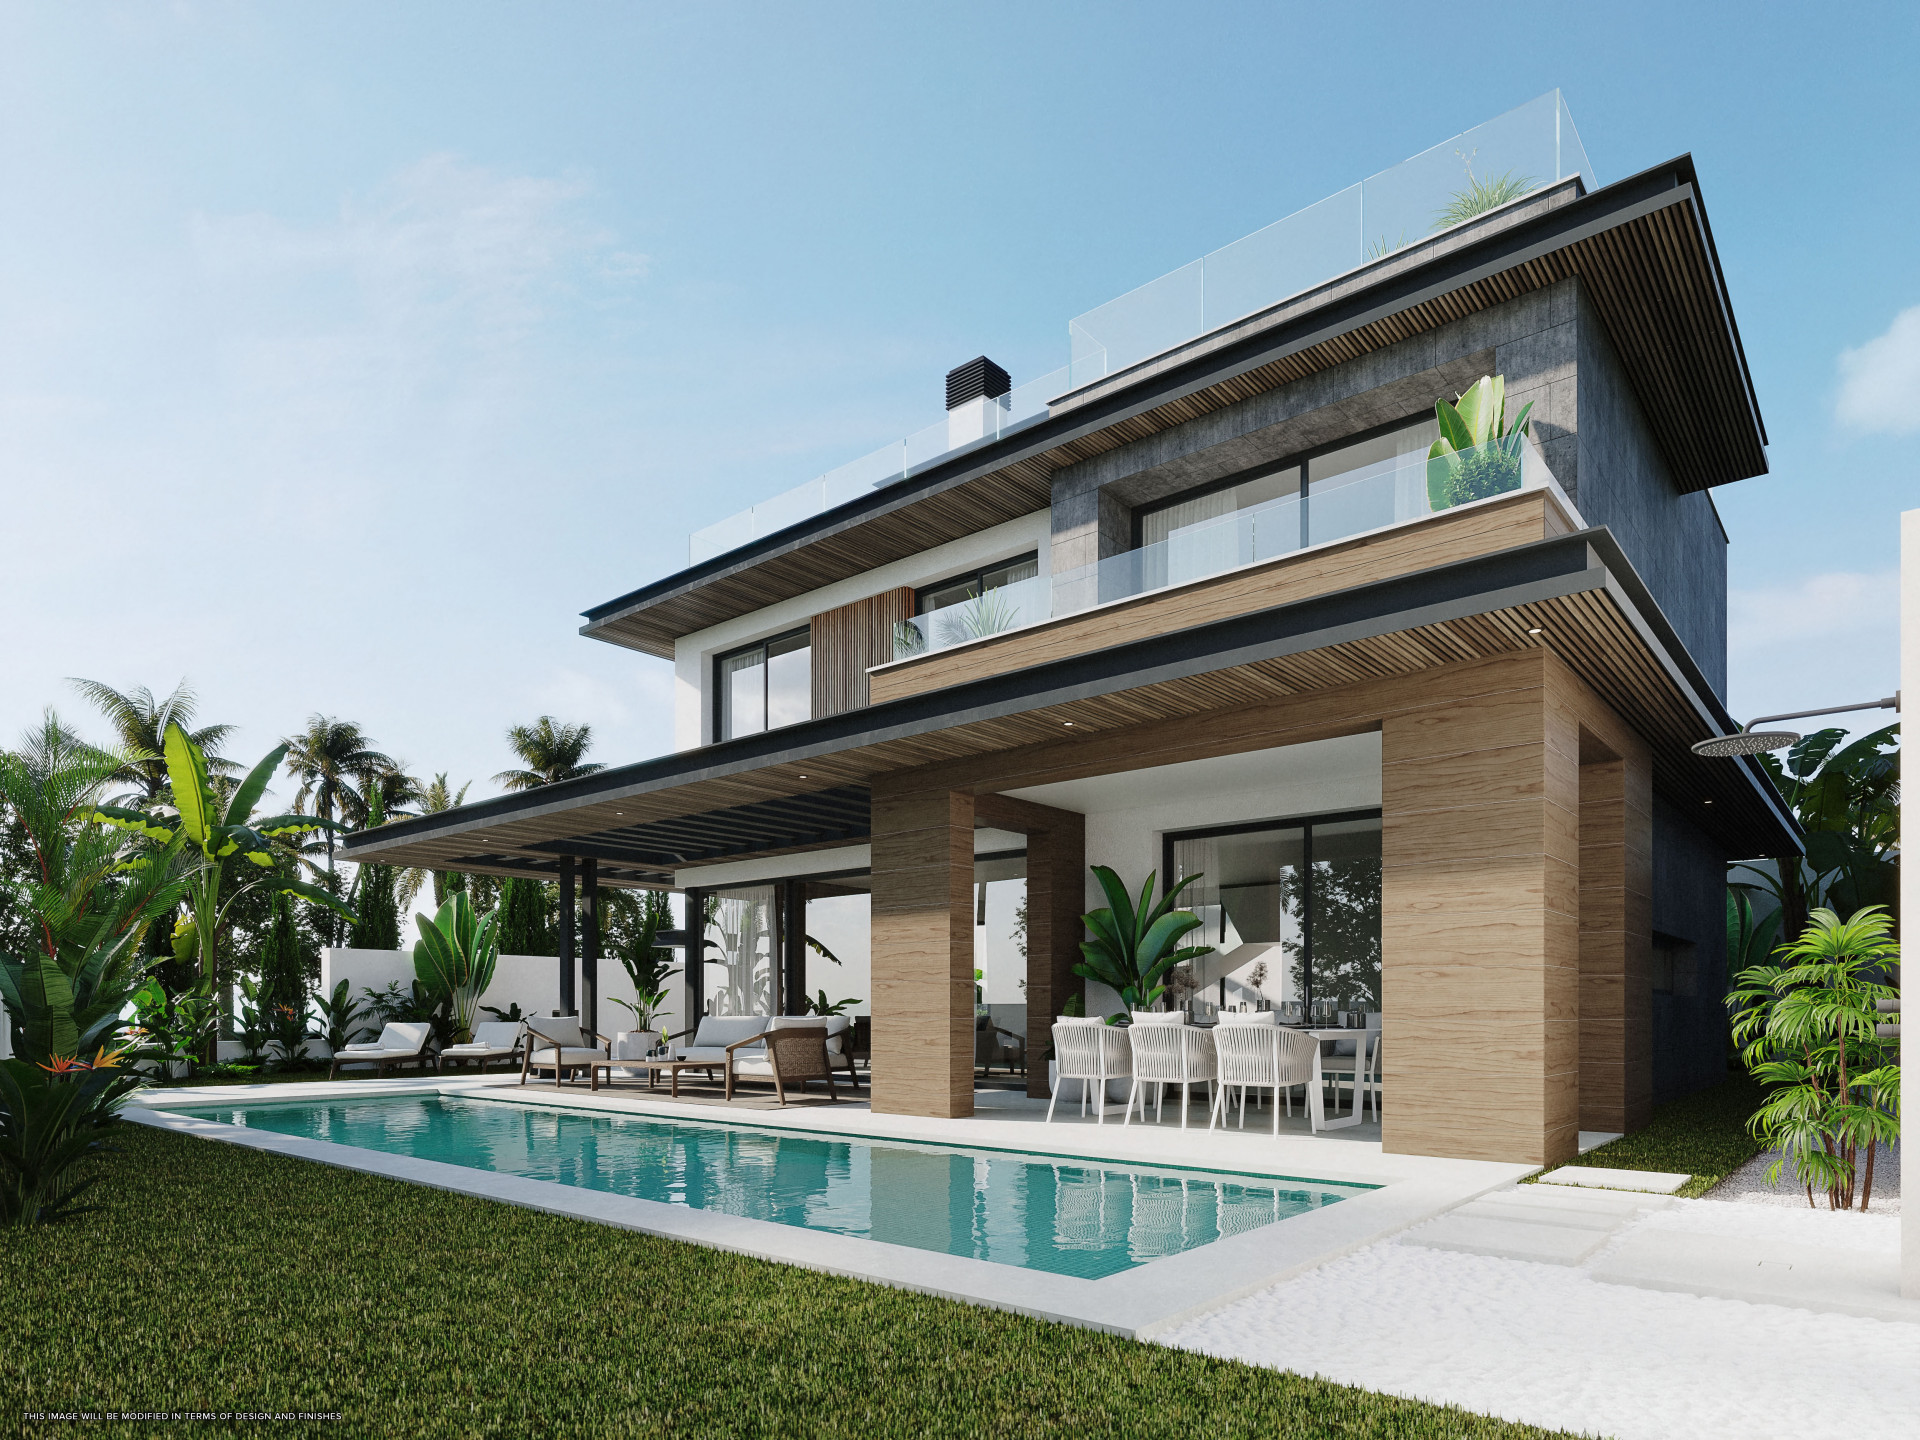 New luxury villa with solarium and private pool with sea views in La Cala de Mijas.